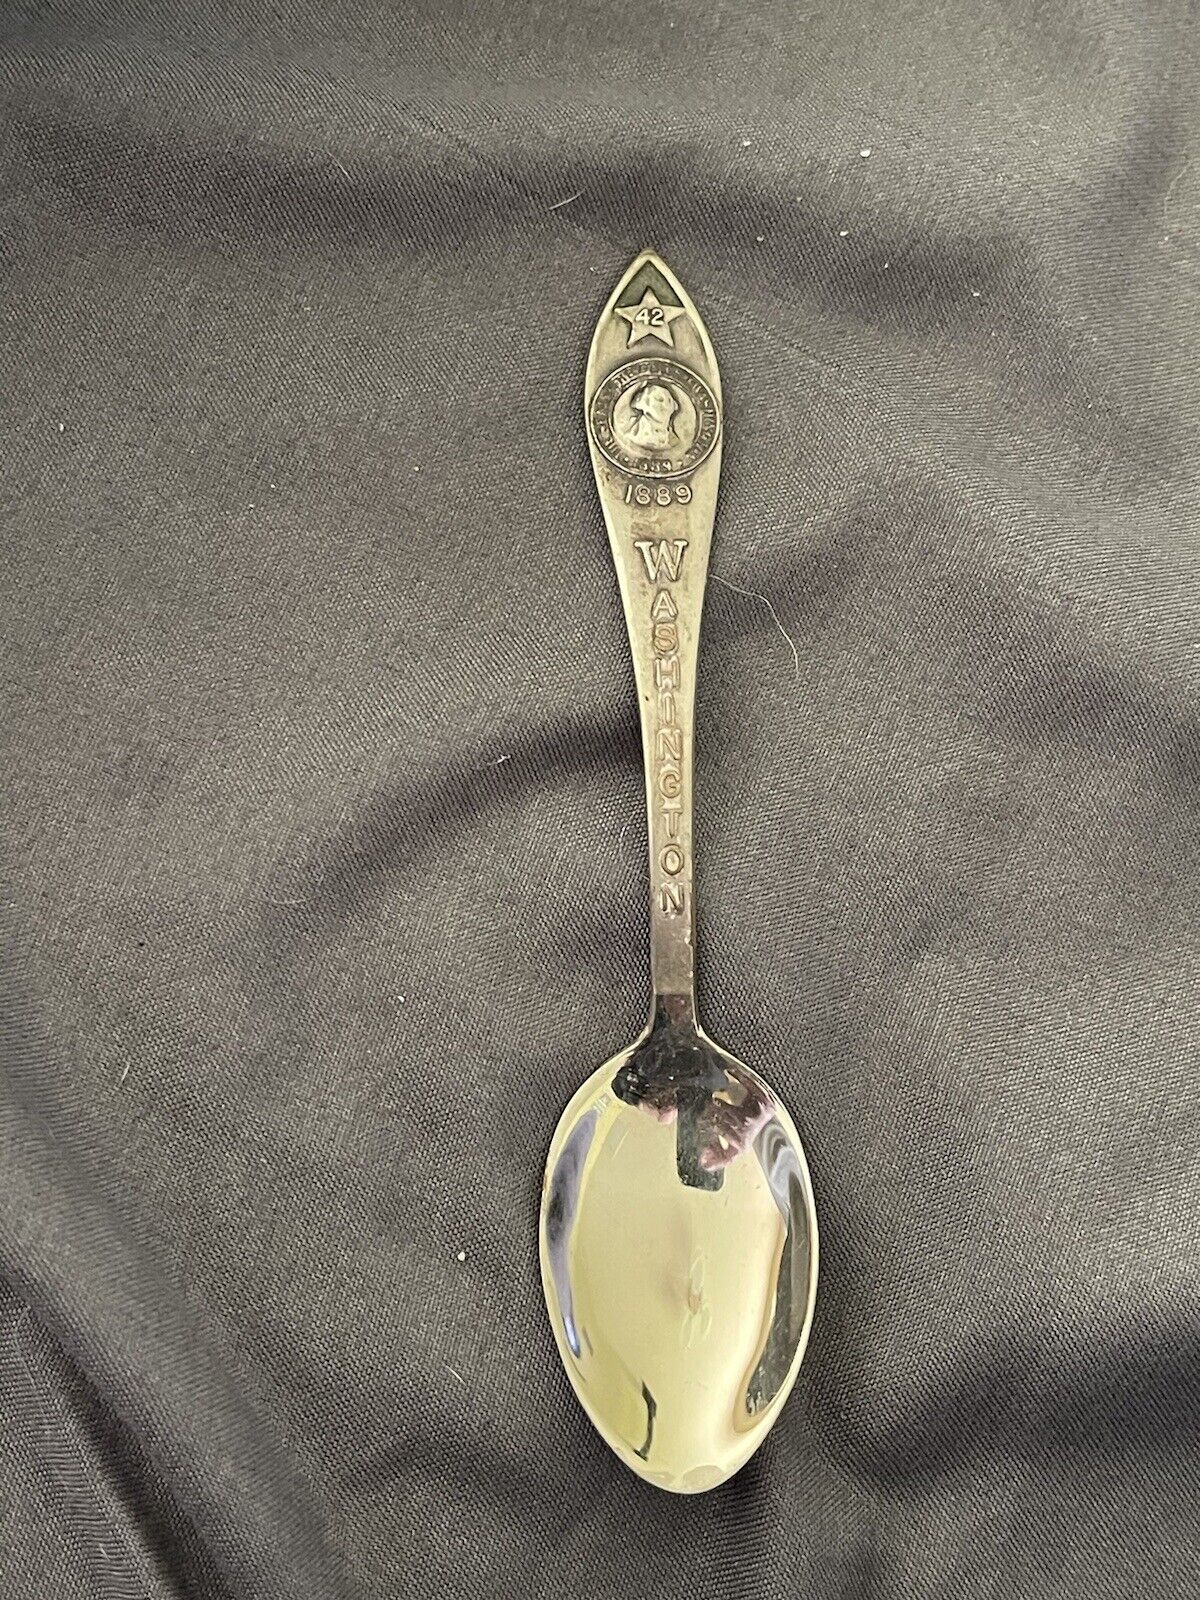 Washington Souvenir Spoon